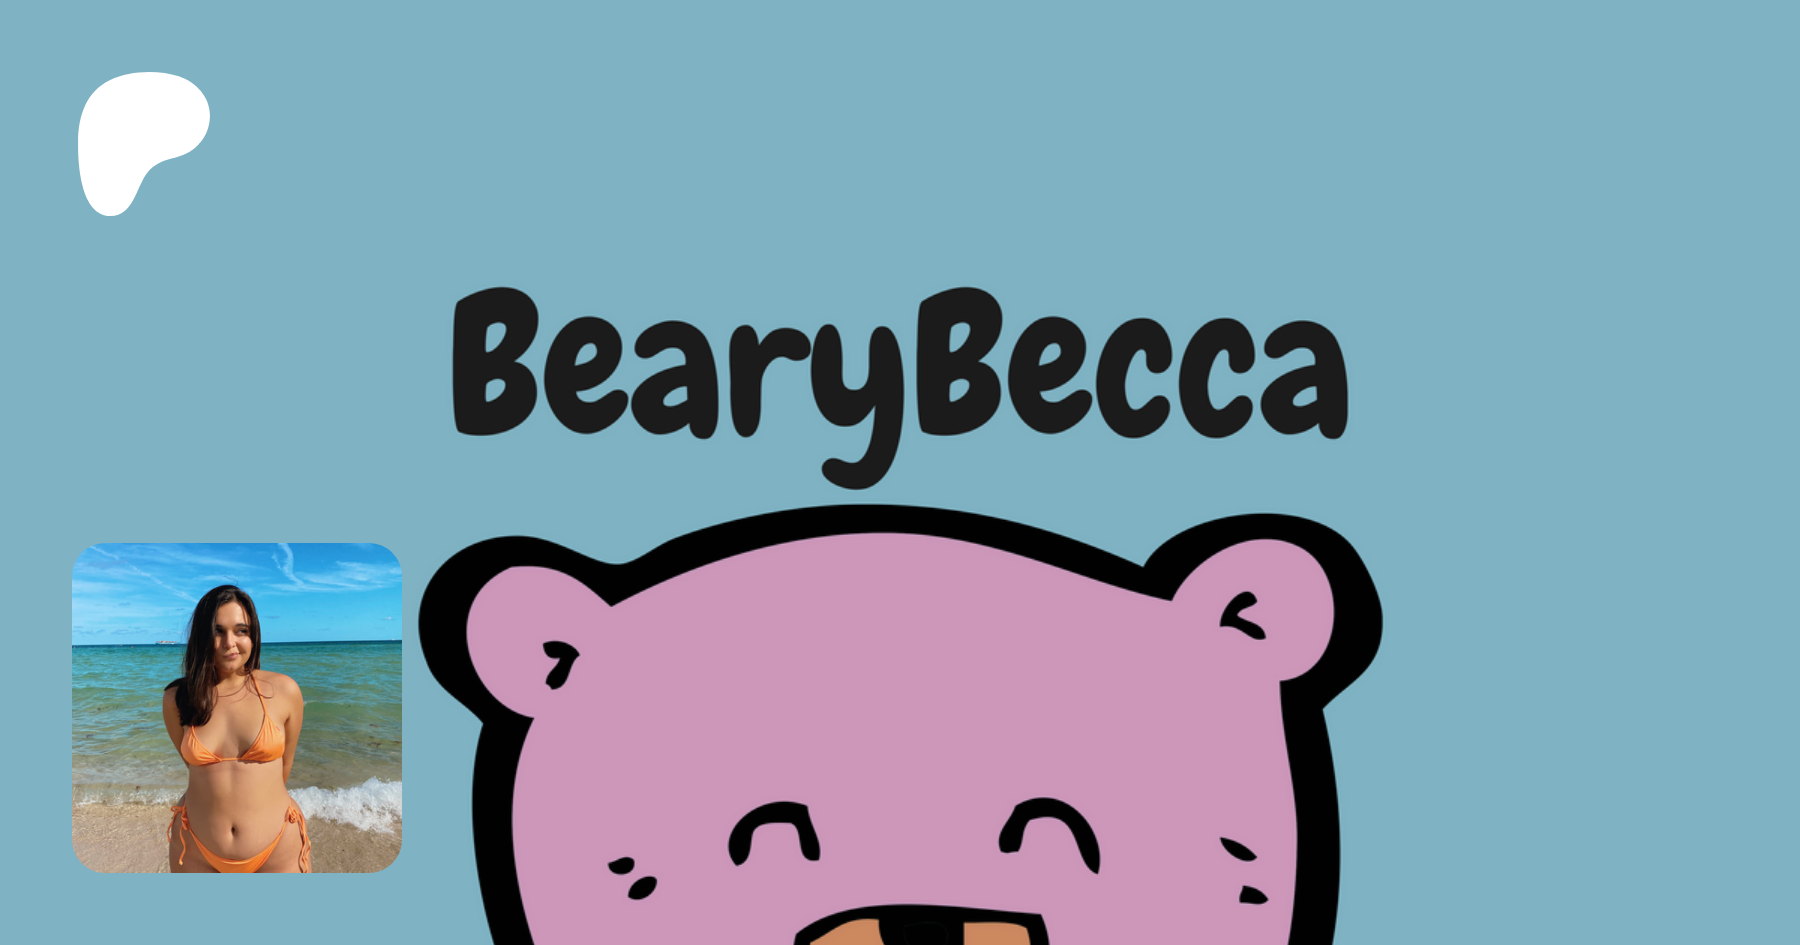 Beary becca patreon